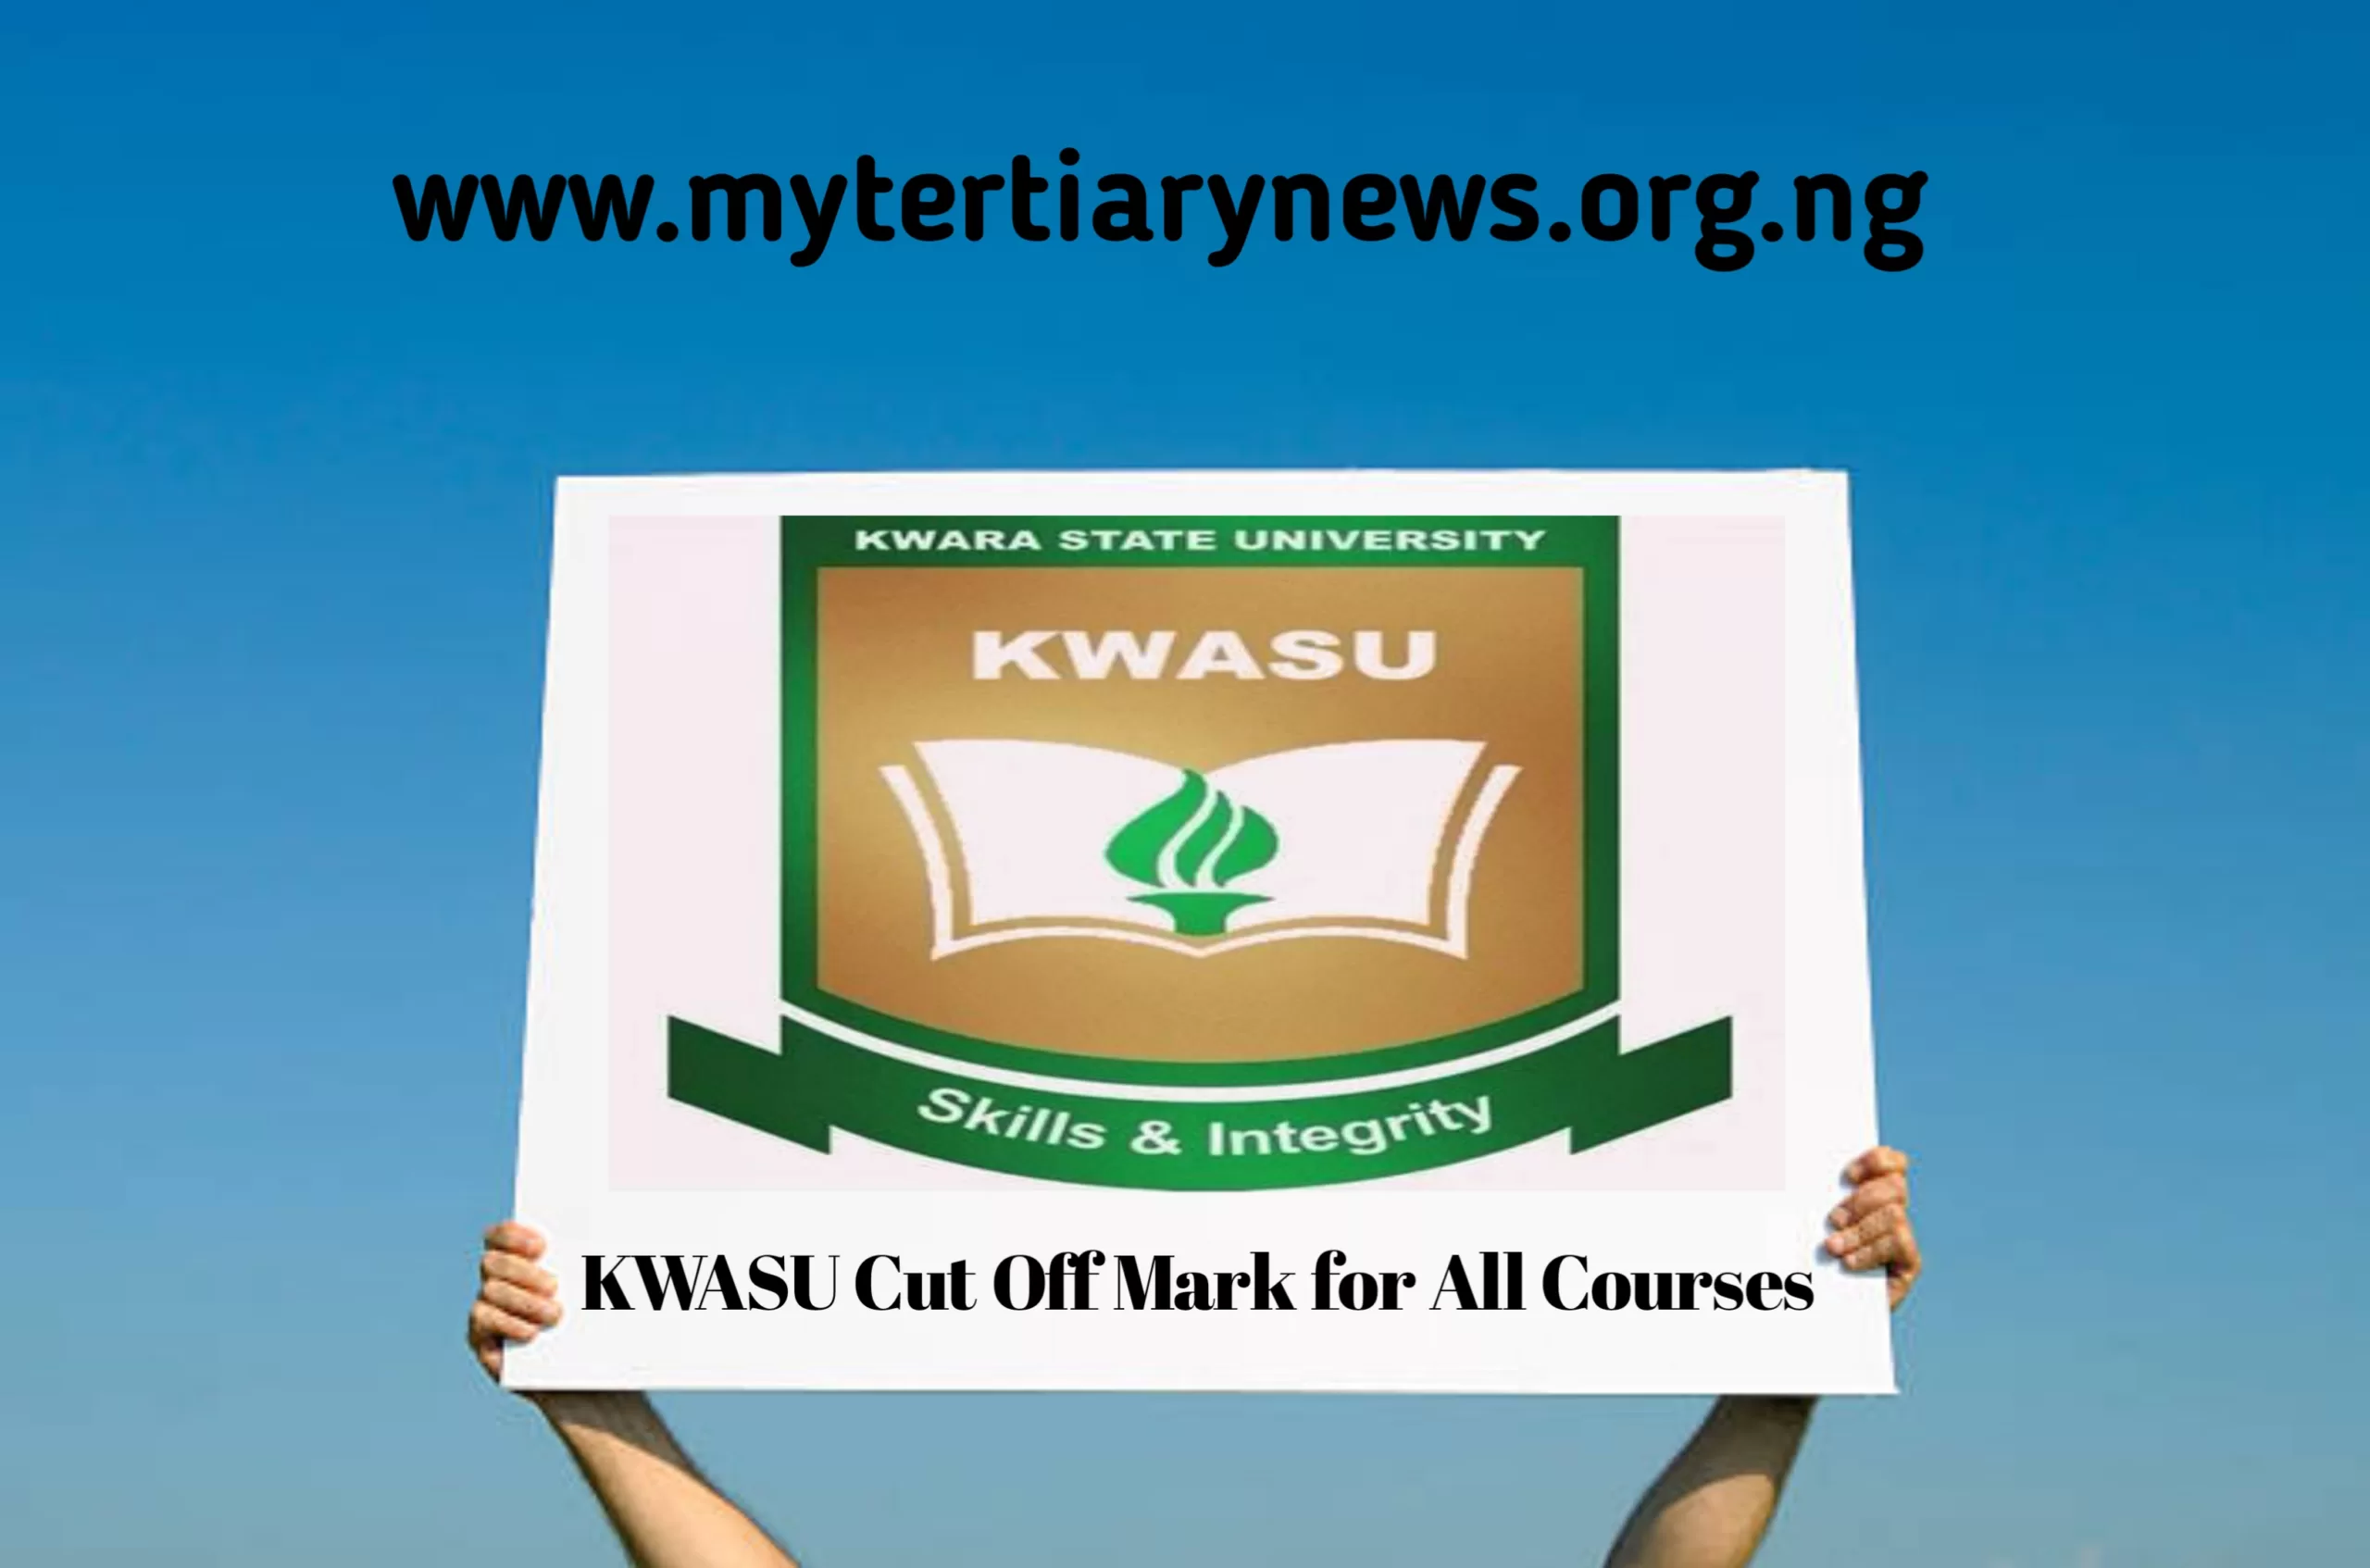 KWASU Image || KWASU Cut Off Mark for All Courses